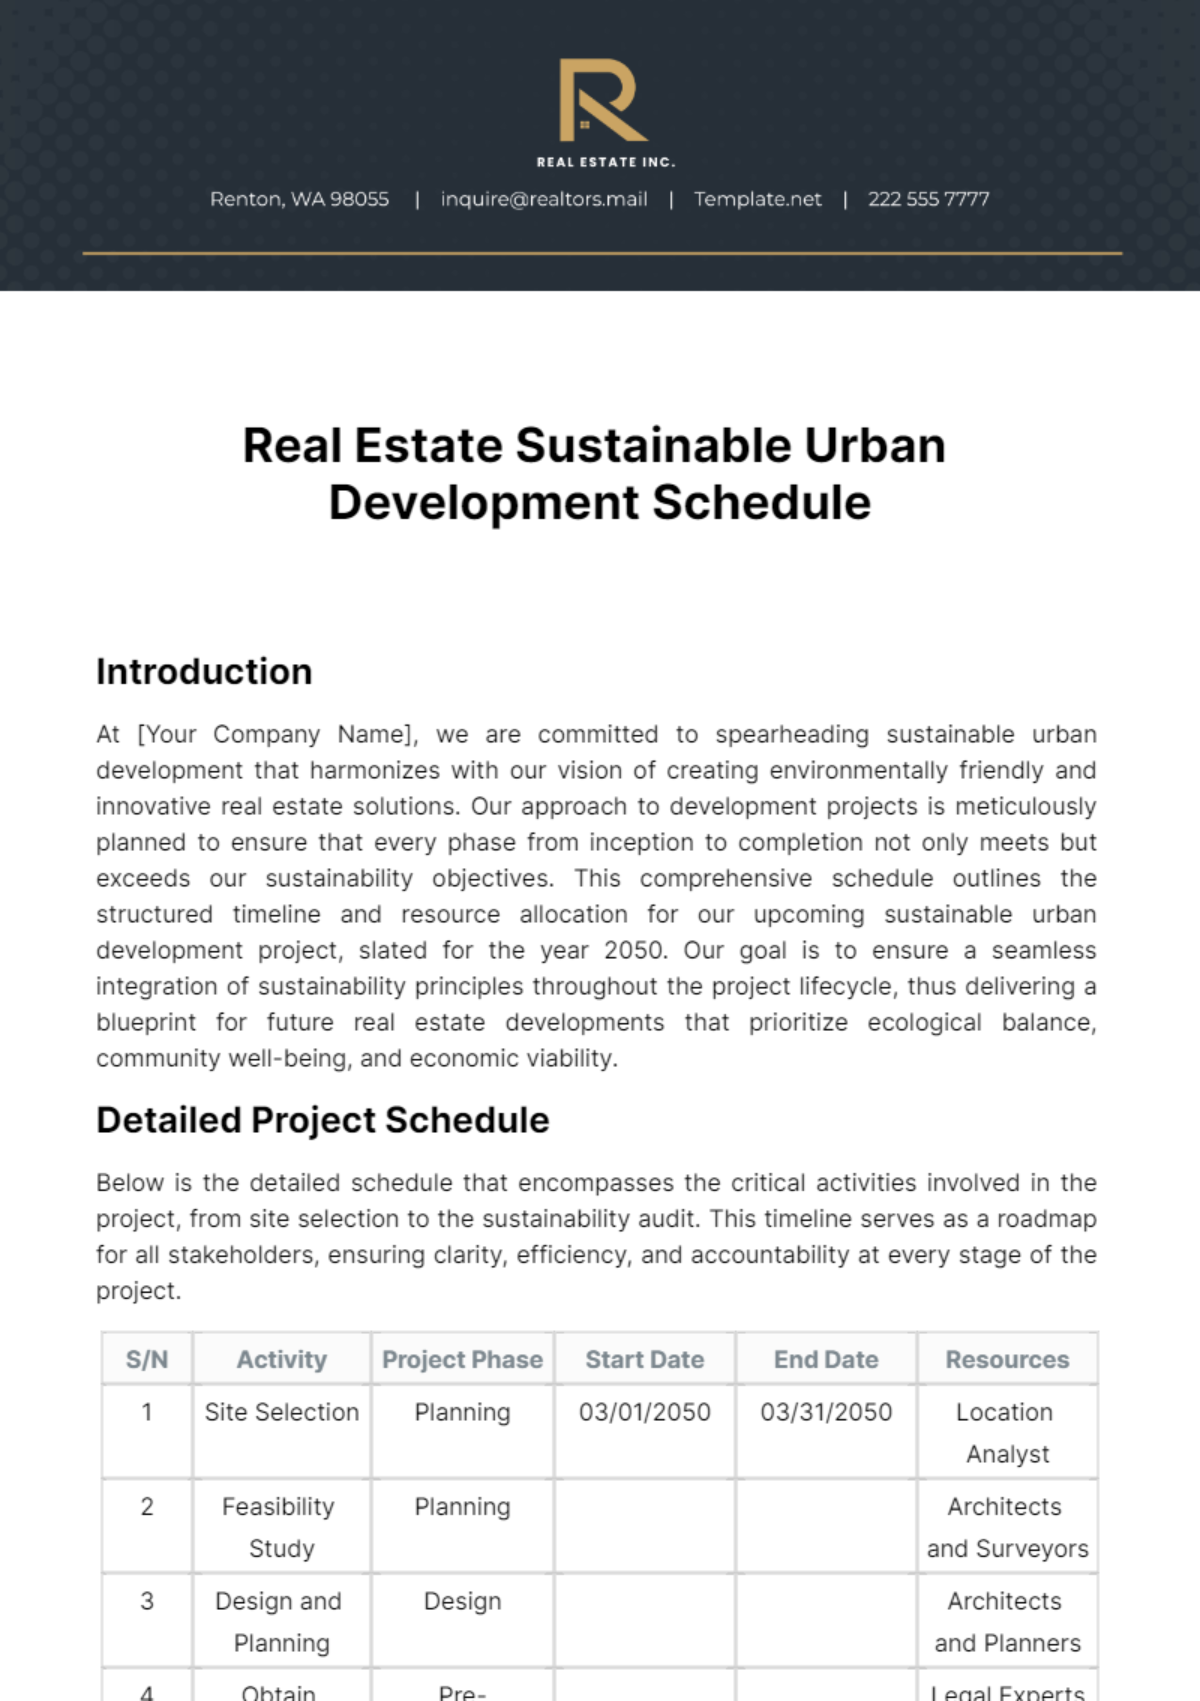 Real Estate Sustainable Urban Development Schedule Template